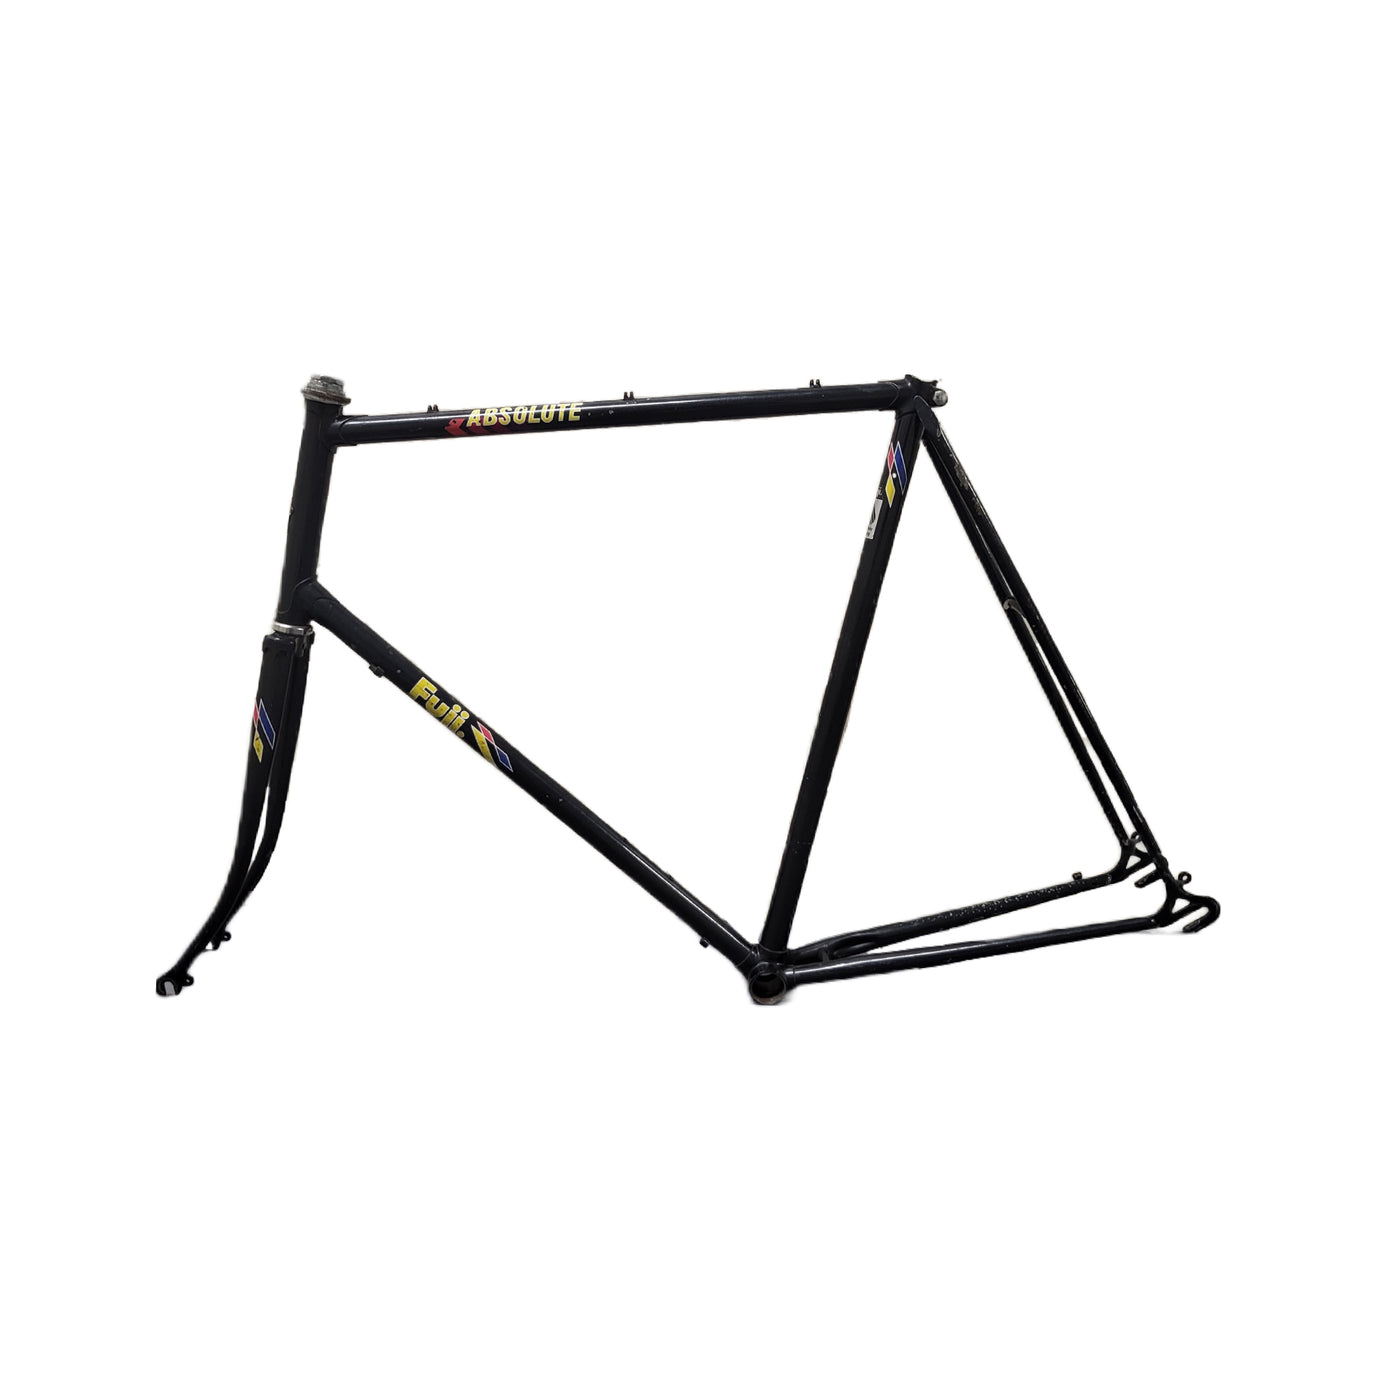 Vintage Fuji Absolute Utility Steel Bicycle Frame | Size 62cm